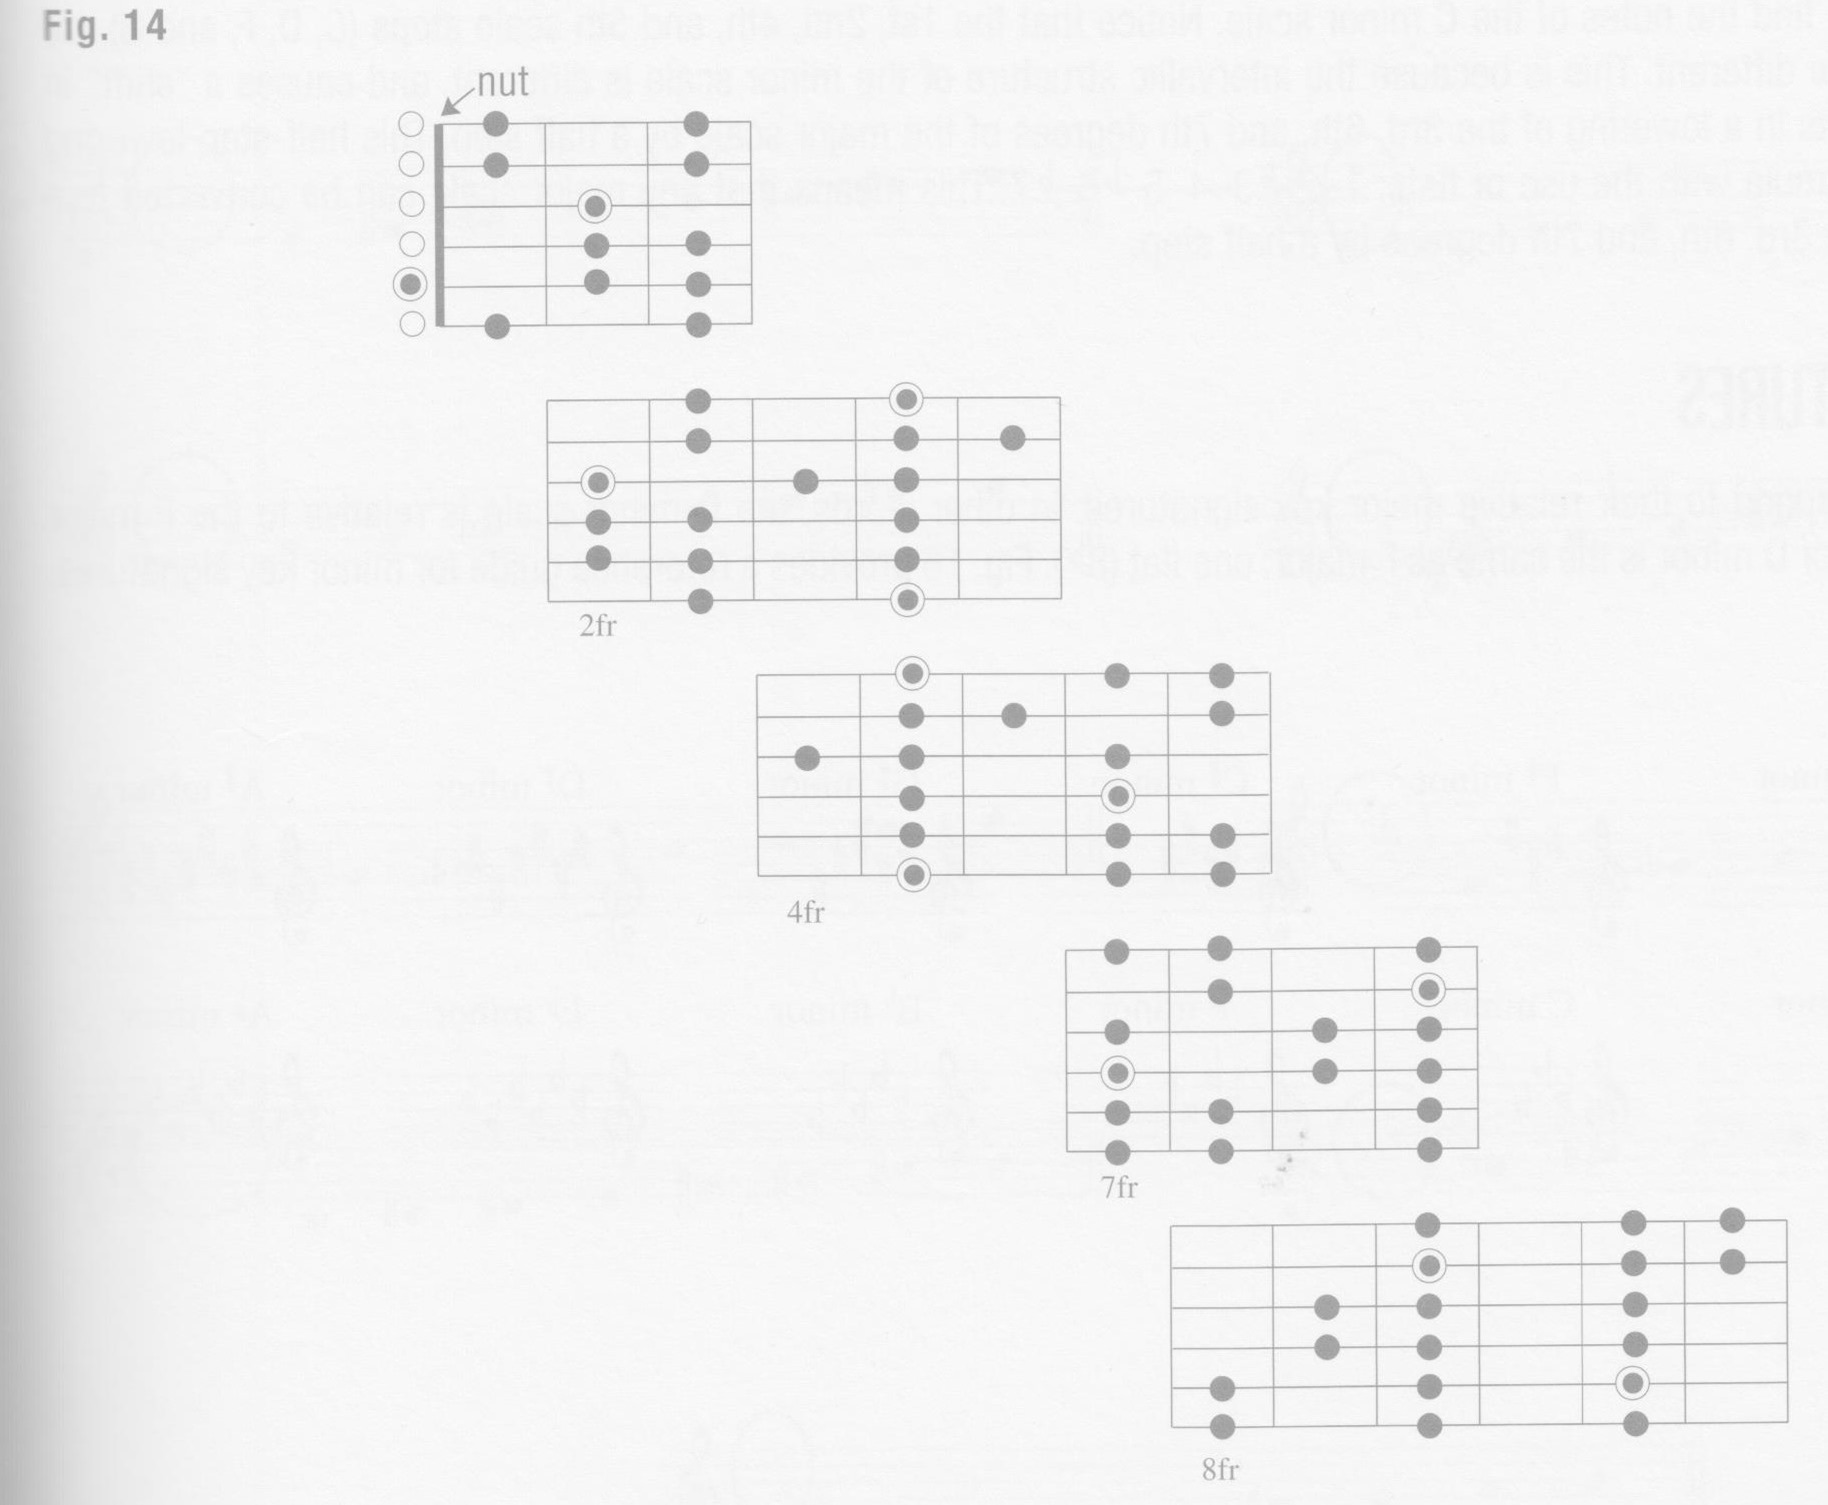 p21-figure-14-a-minor-scales